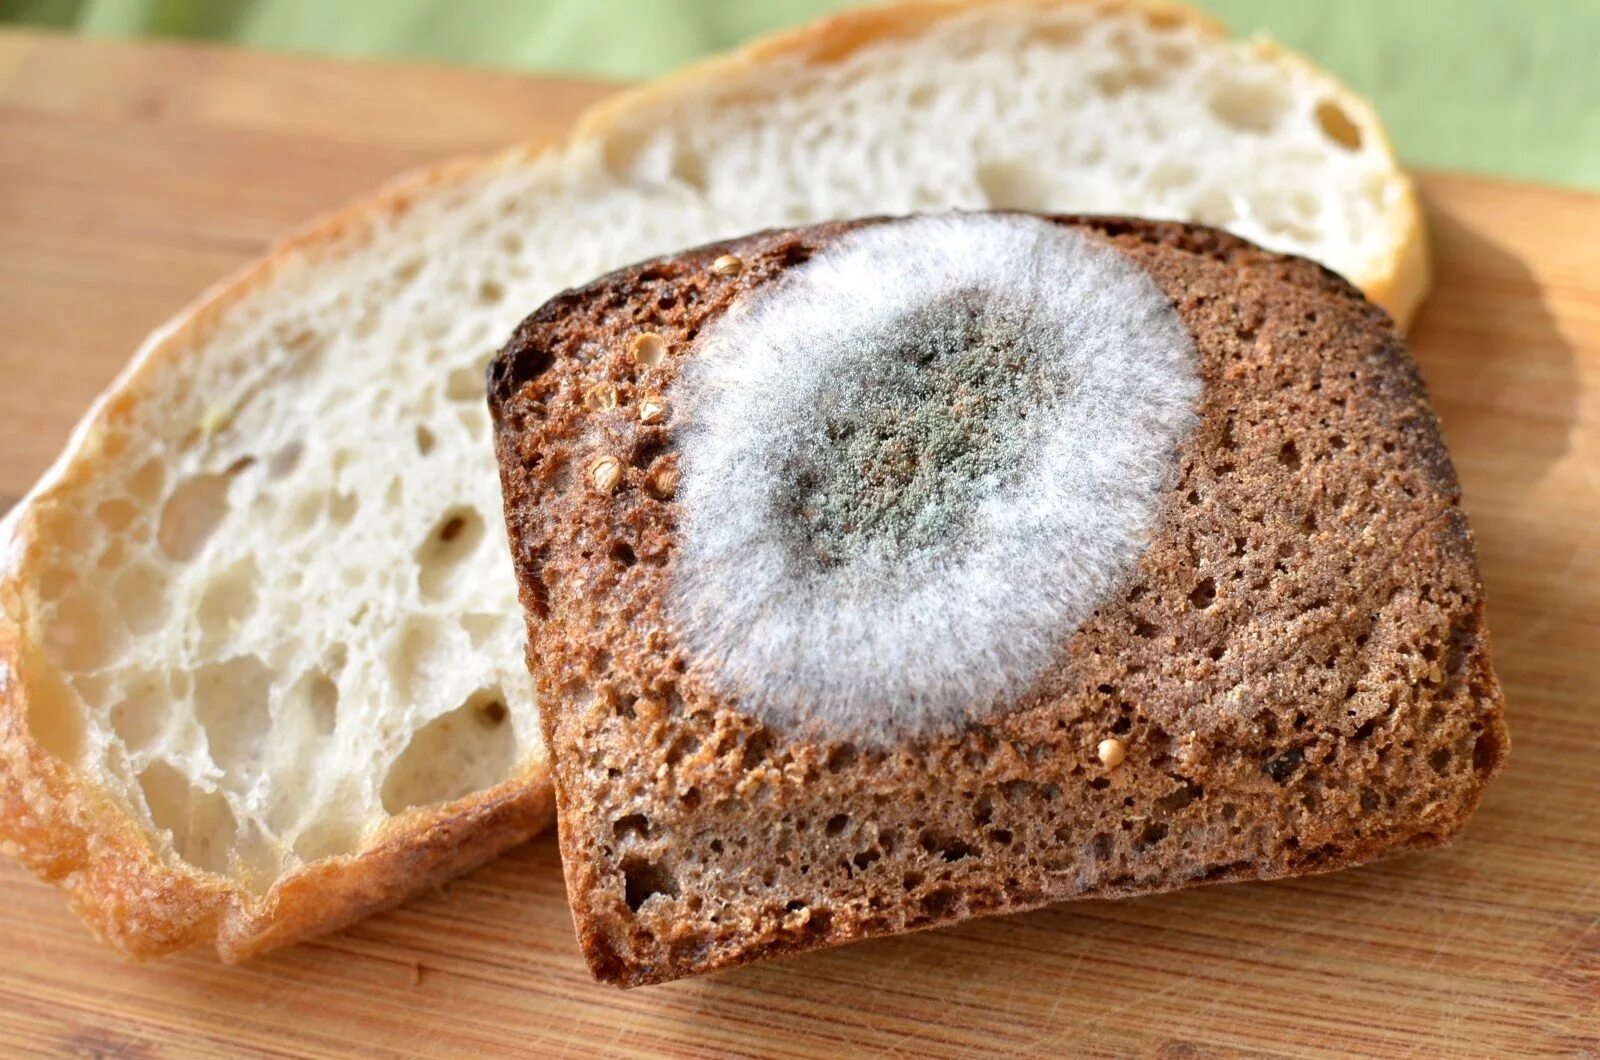 Хлебная плесень мукор. Белая плесень мукор на хлебе. Гриб пеницилл на хлебе. Гриб мукор на хлебе. Плесень питание